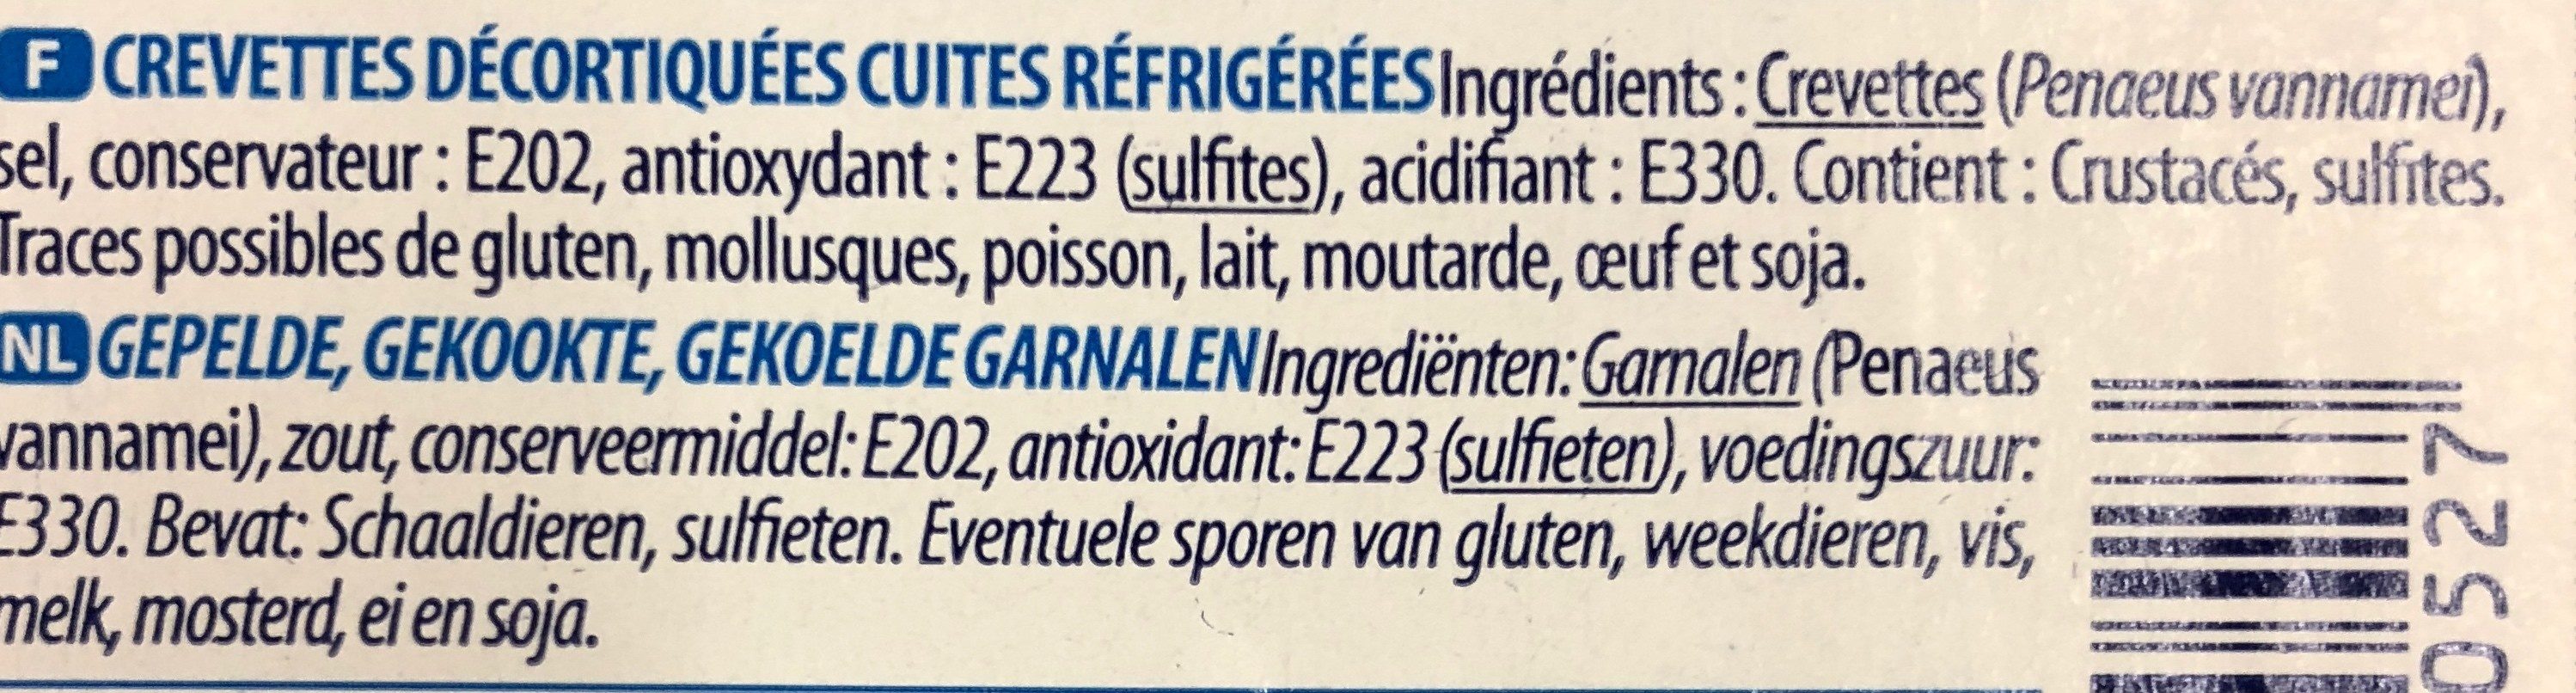 Crevettes royales - Ingredients - fr